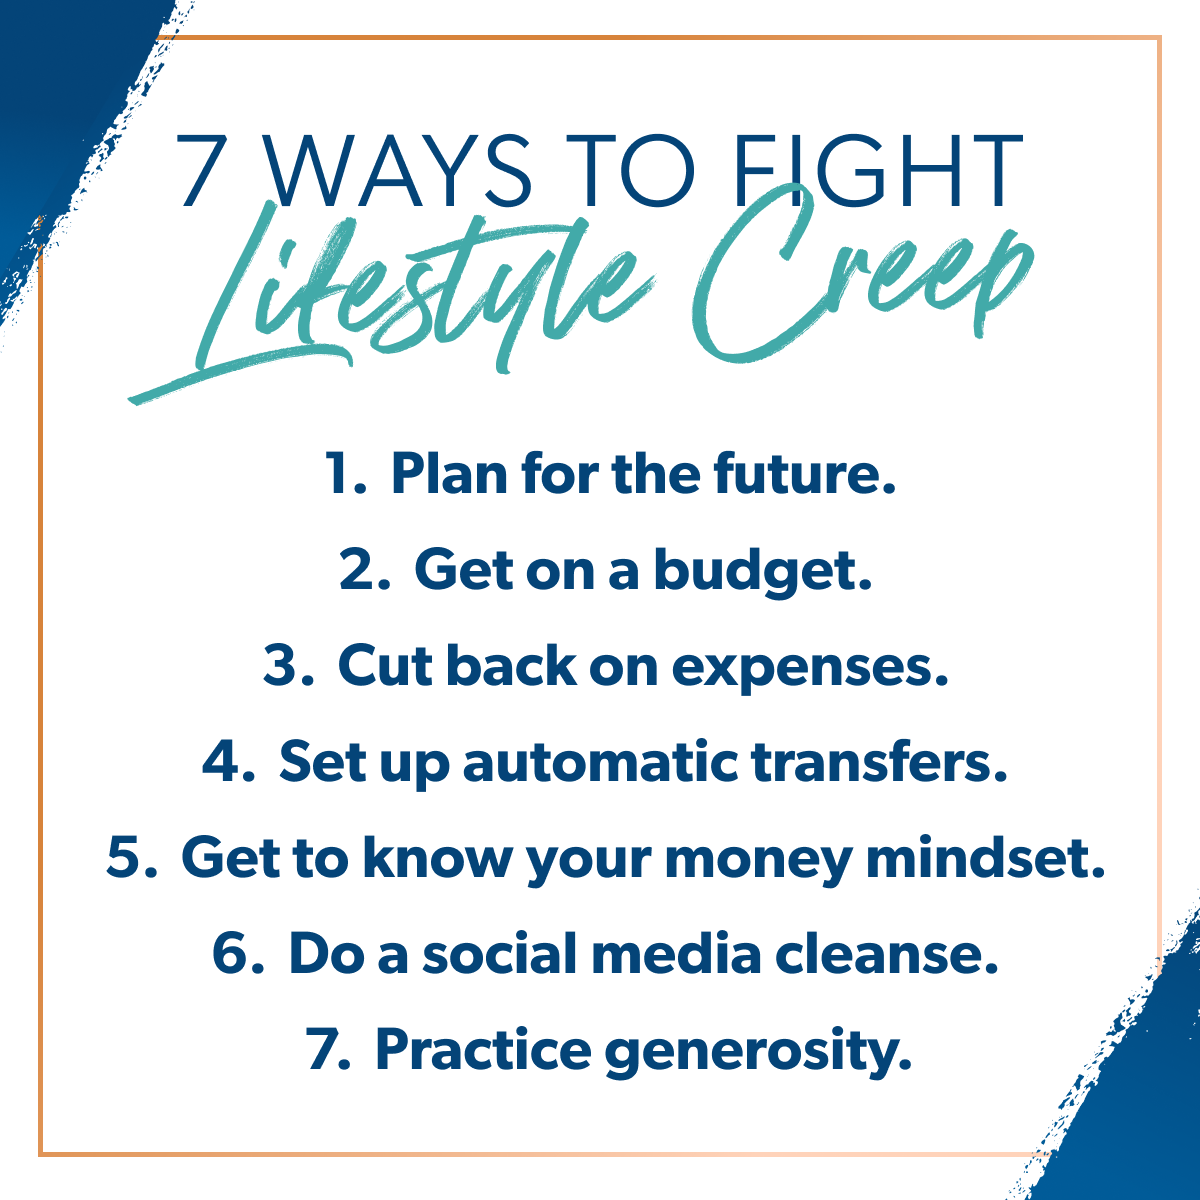 7 ways to fight lifestyle creep